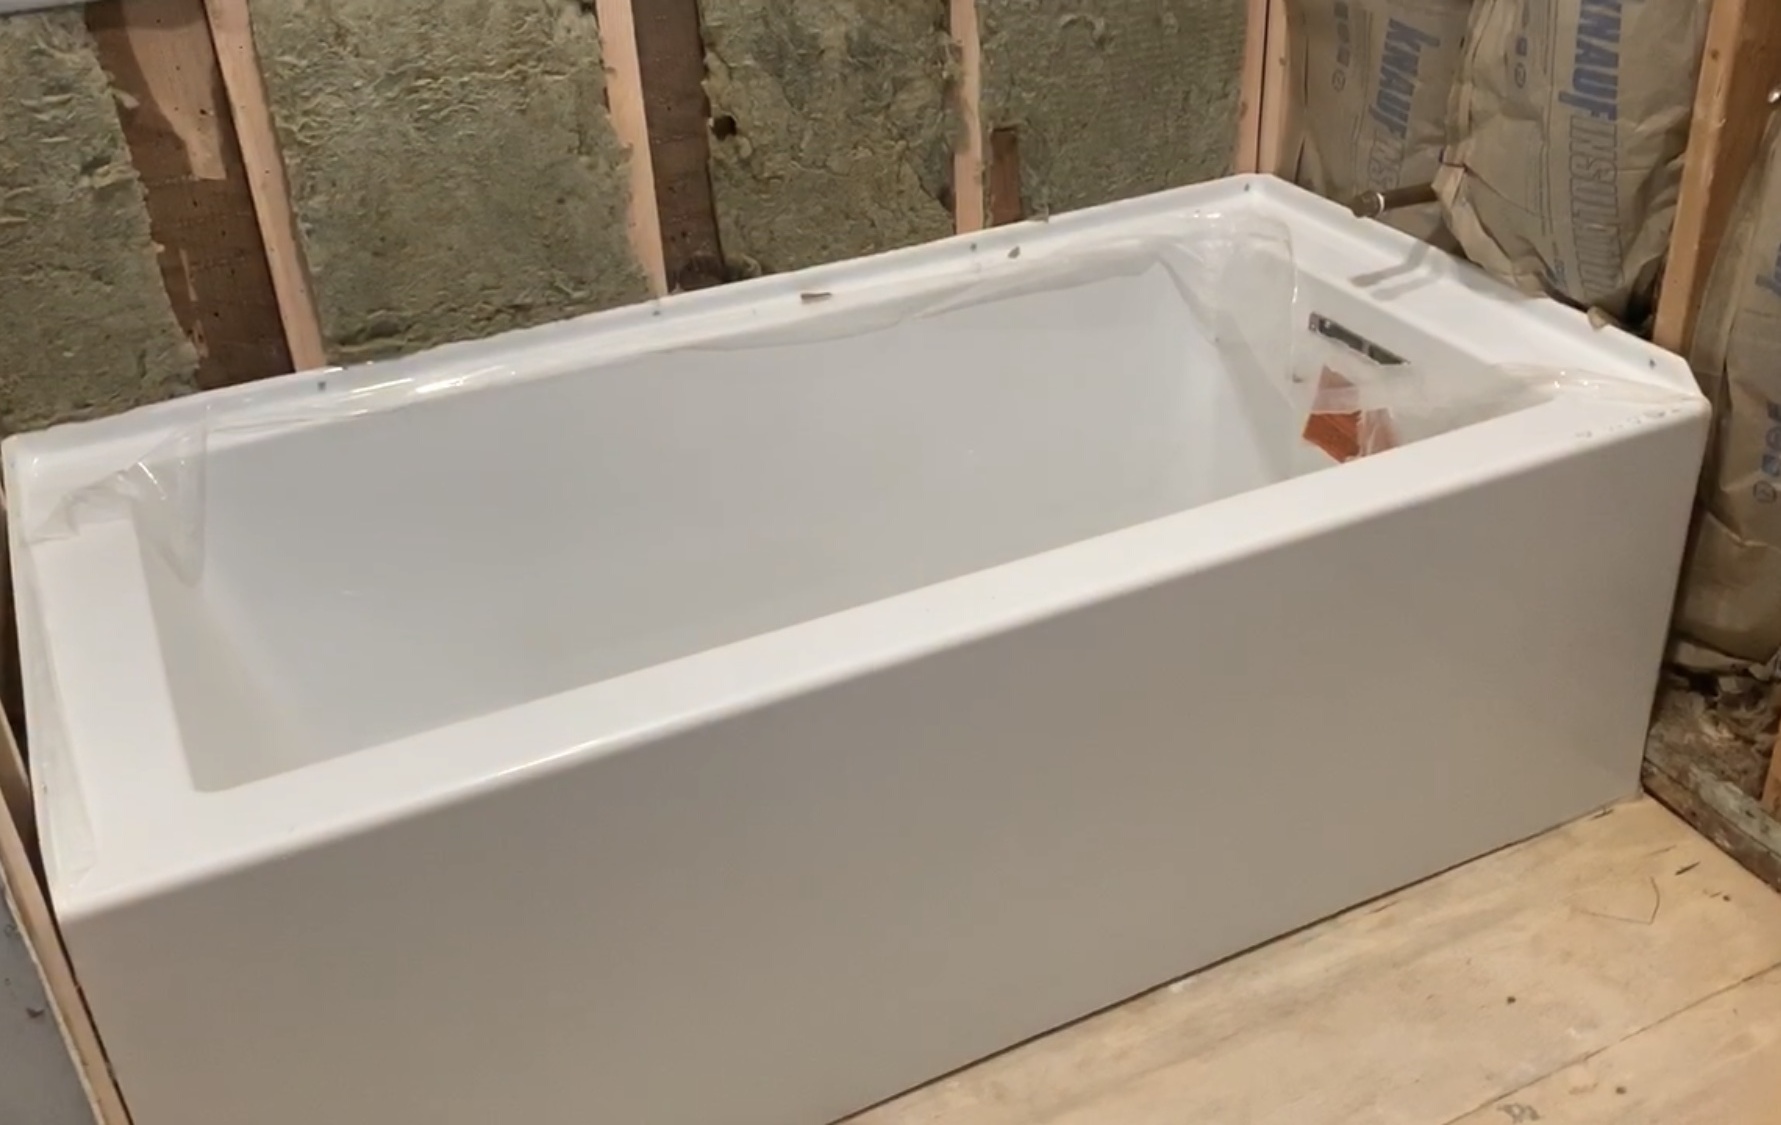 Simply by Simone - Simone Piliero - My Black and White Bathroom Renovation - Tub Installation - #bathroom #home #renovation #bathroomrenovation #diyhome #bathroomtiles #bathroomdecor #bathroomideas #bathroomrenovationideas